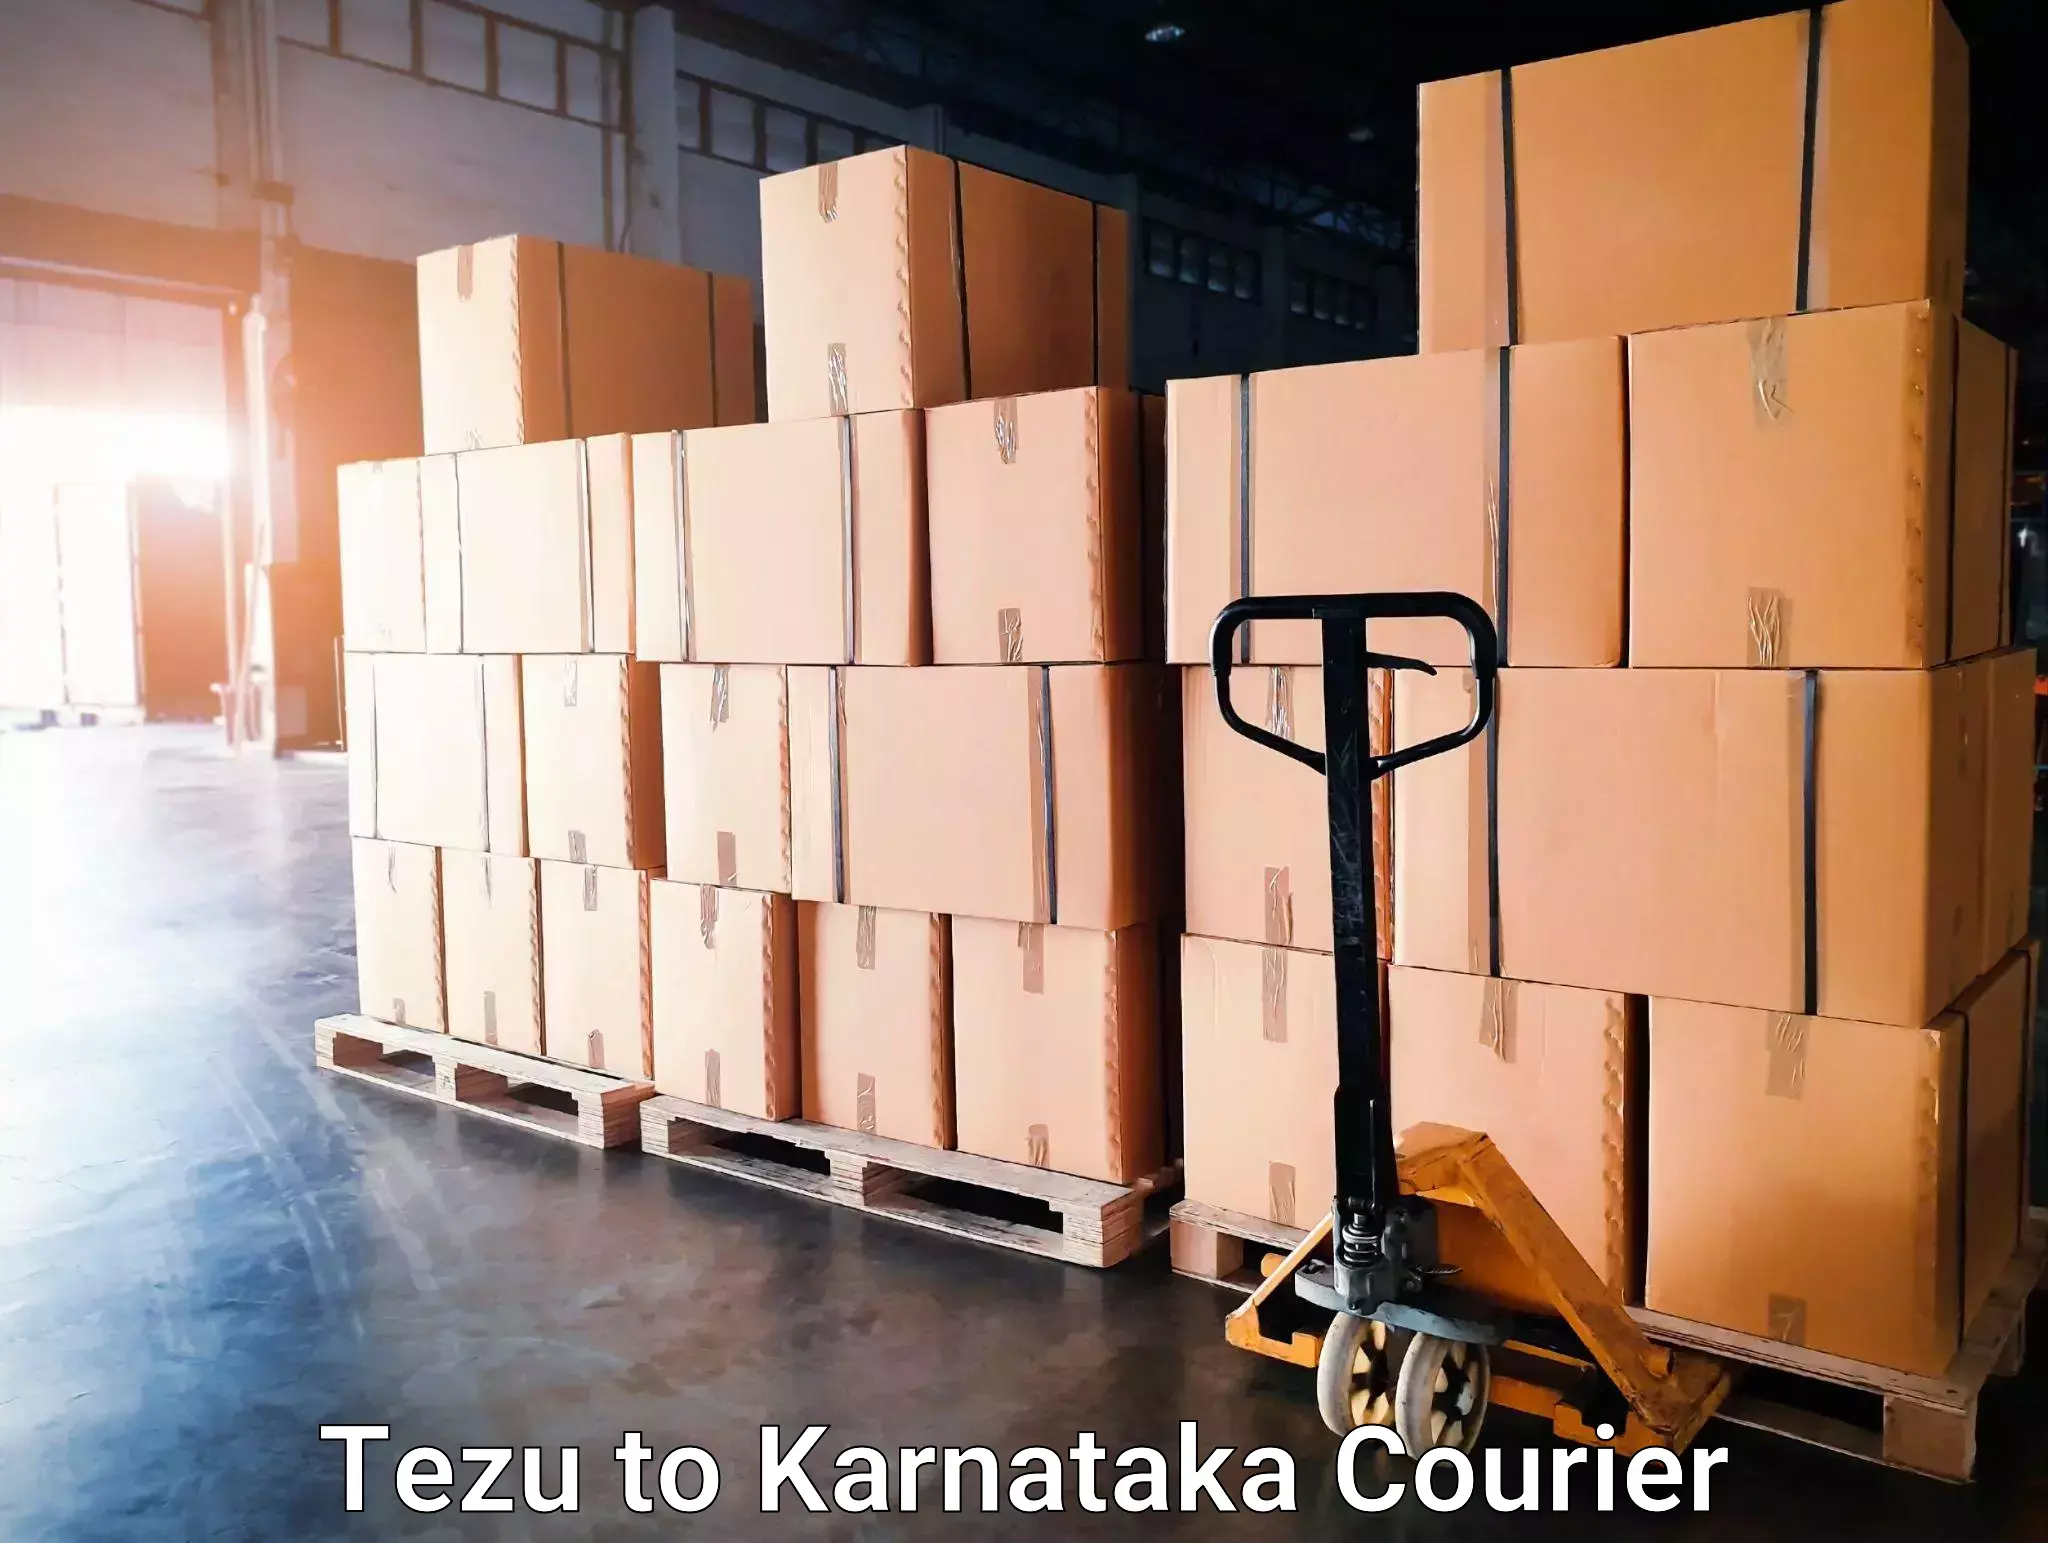 24/7 courier service Tezu to Karnataka